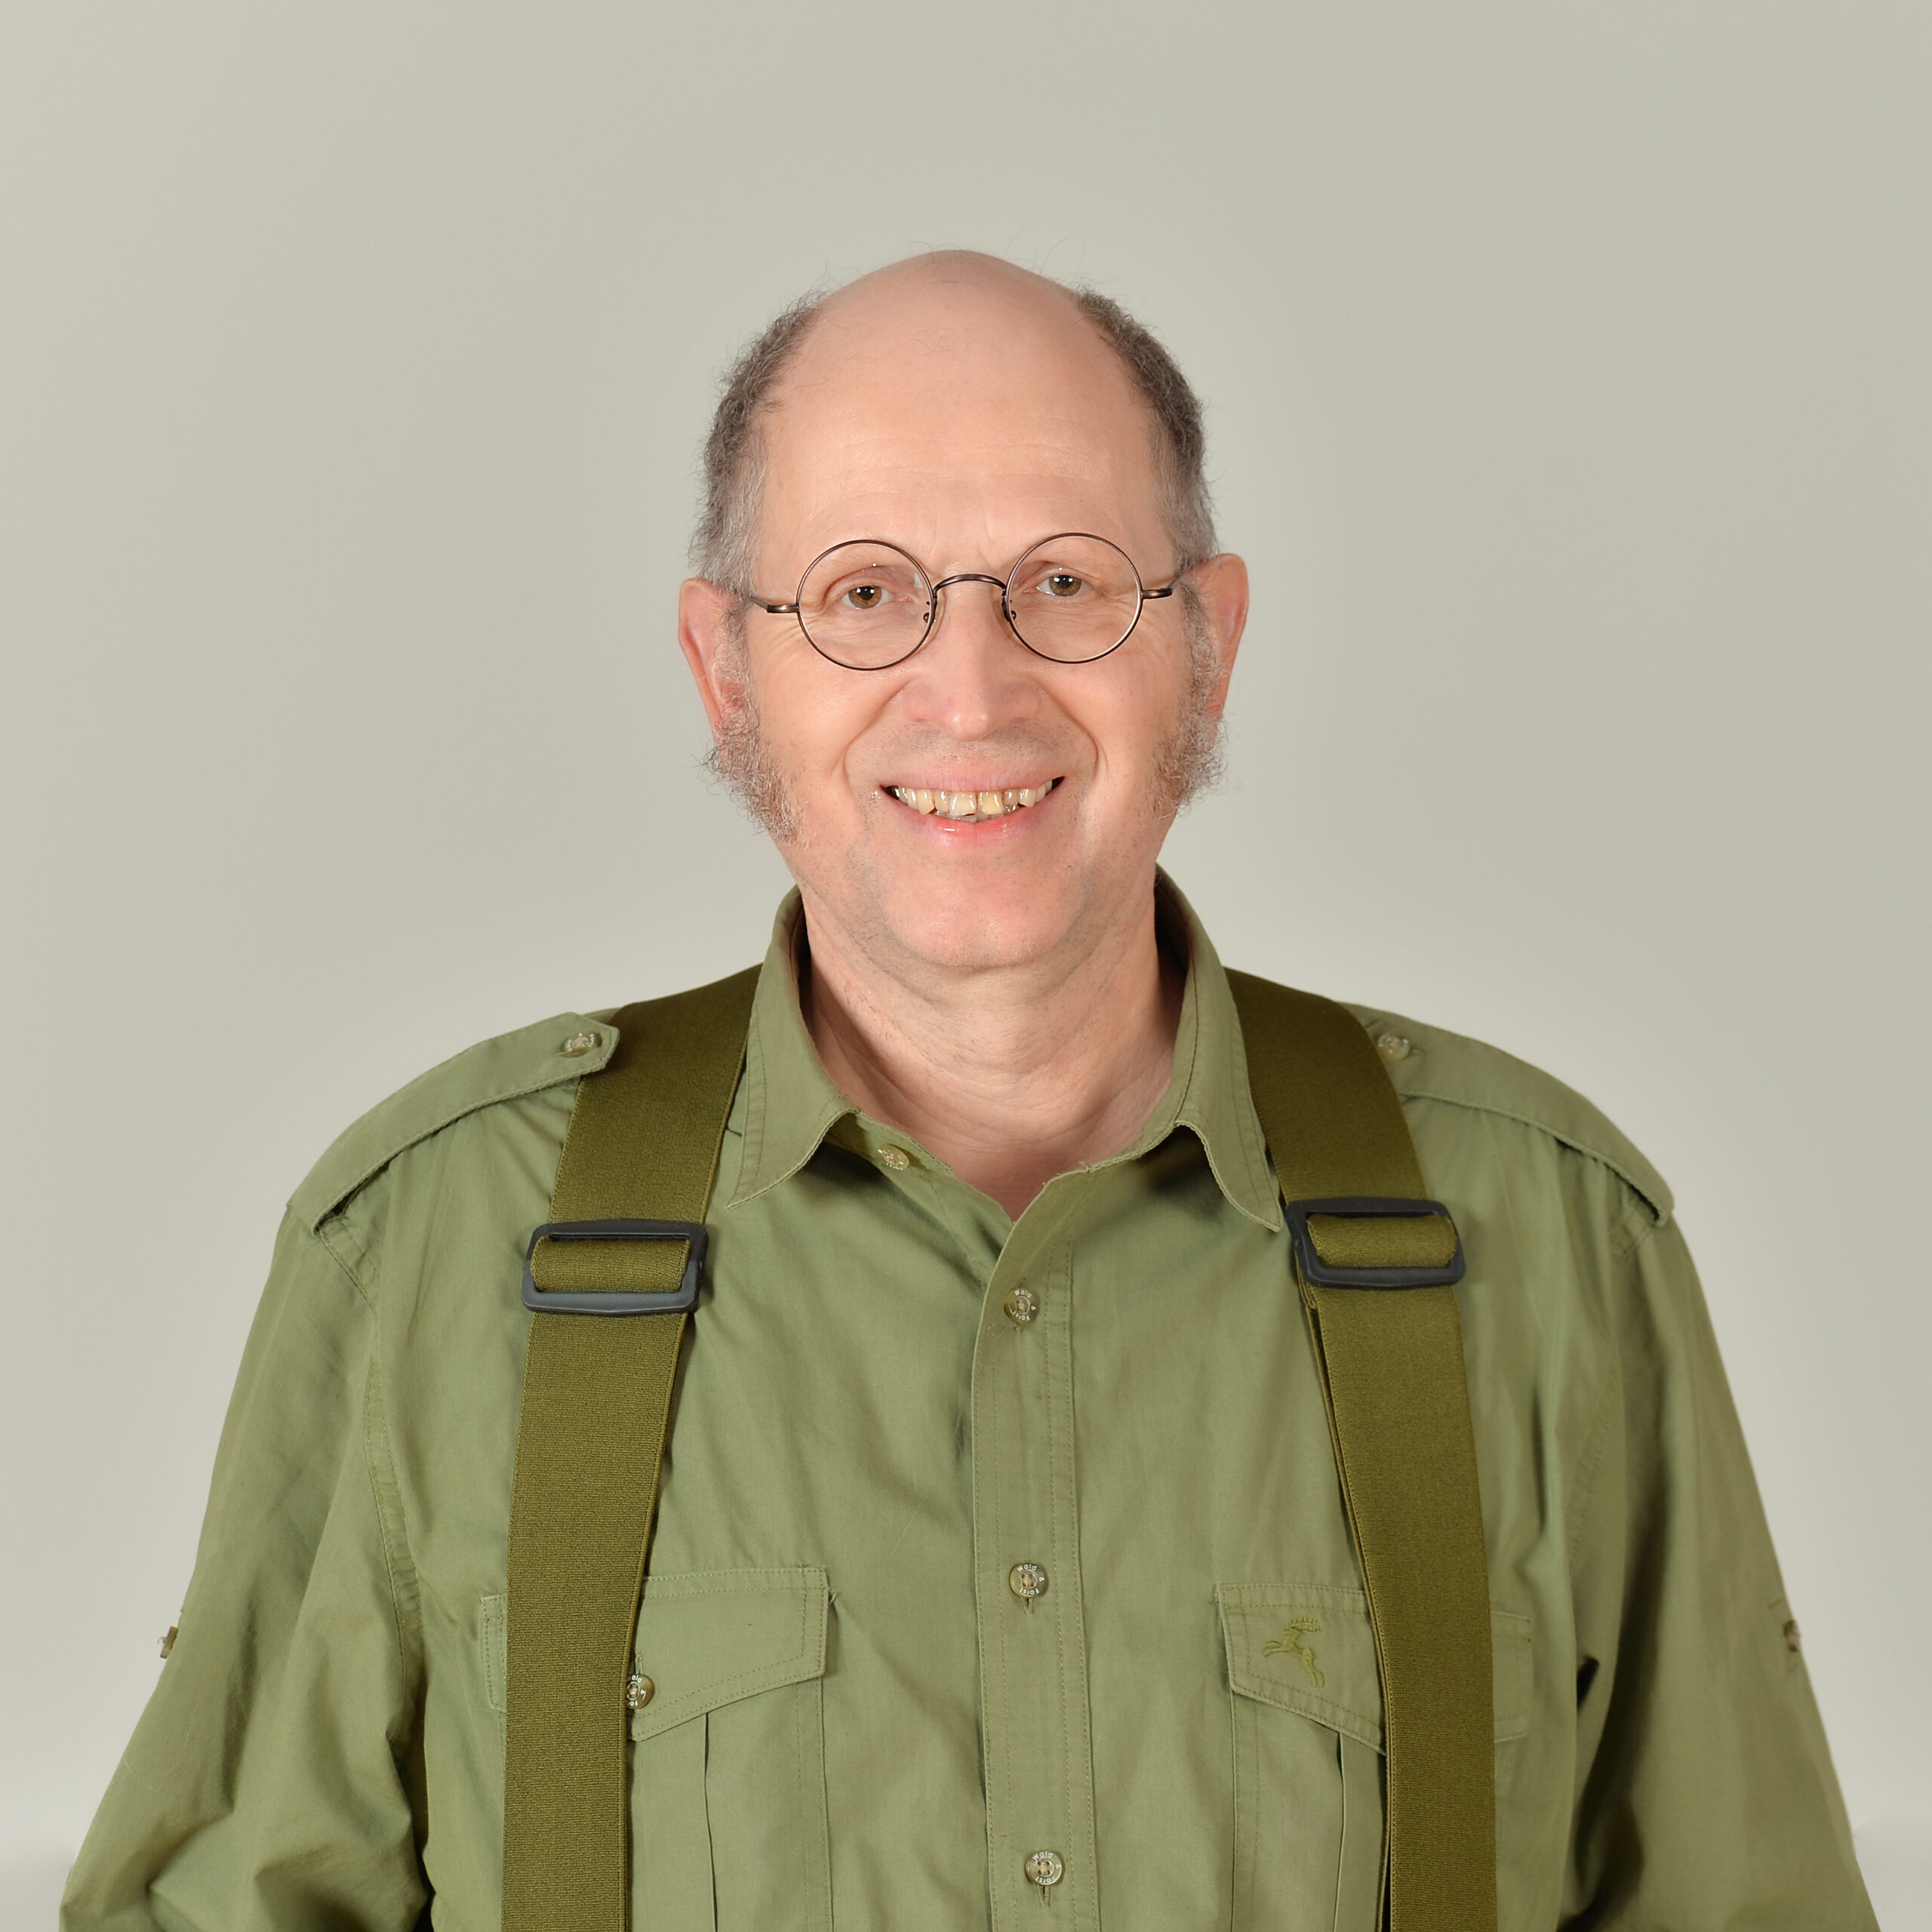 Profilbild von Rolf Meier. Er trägt ein grünes Hemd und grüne Hosenträger.